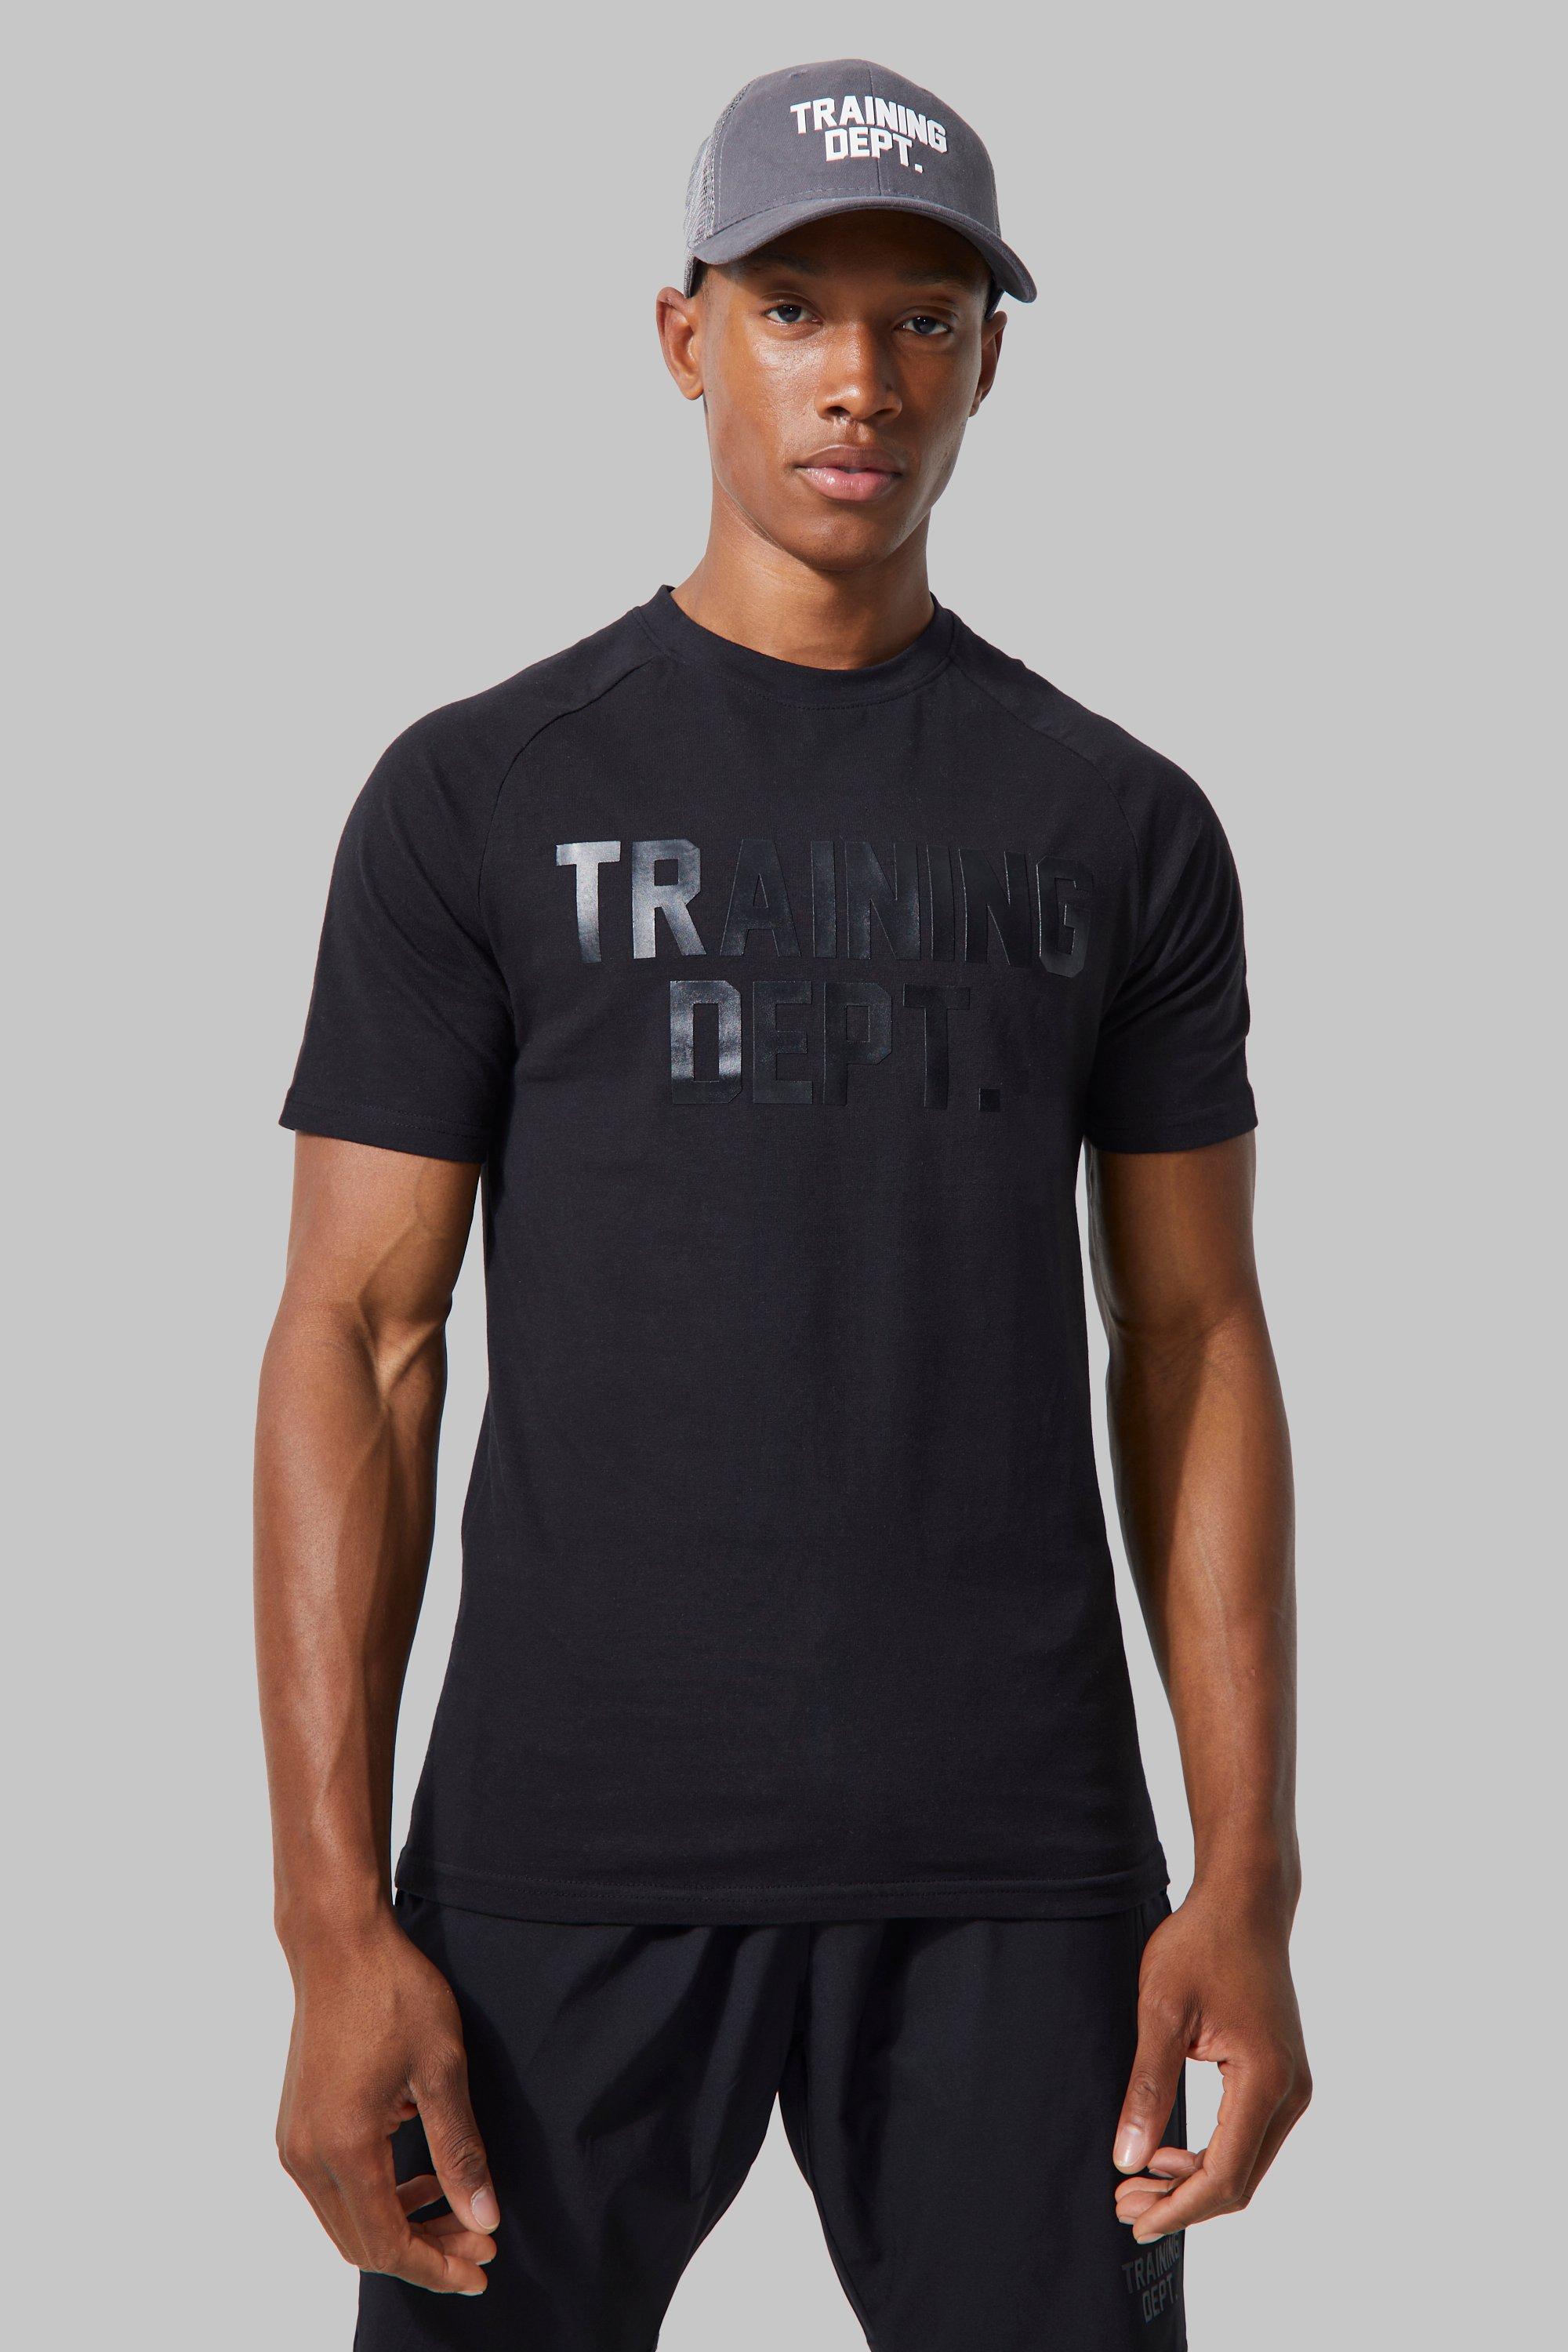 Mens Black Man Active Muscle Fit Training Dept T Shirt, Black